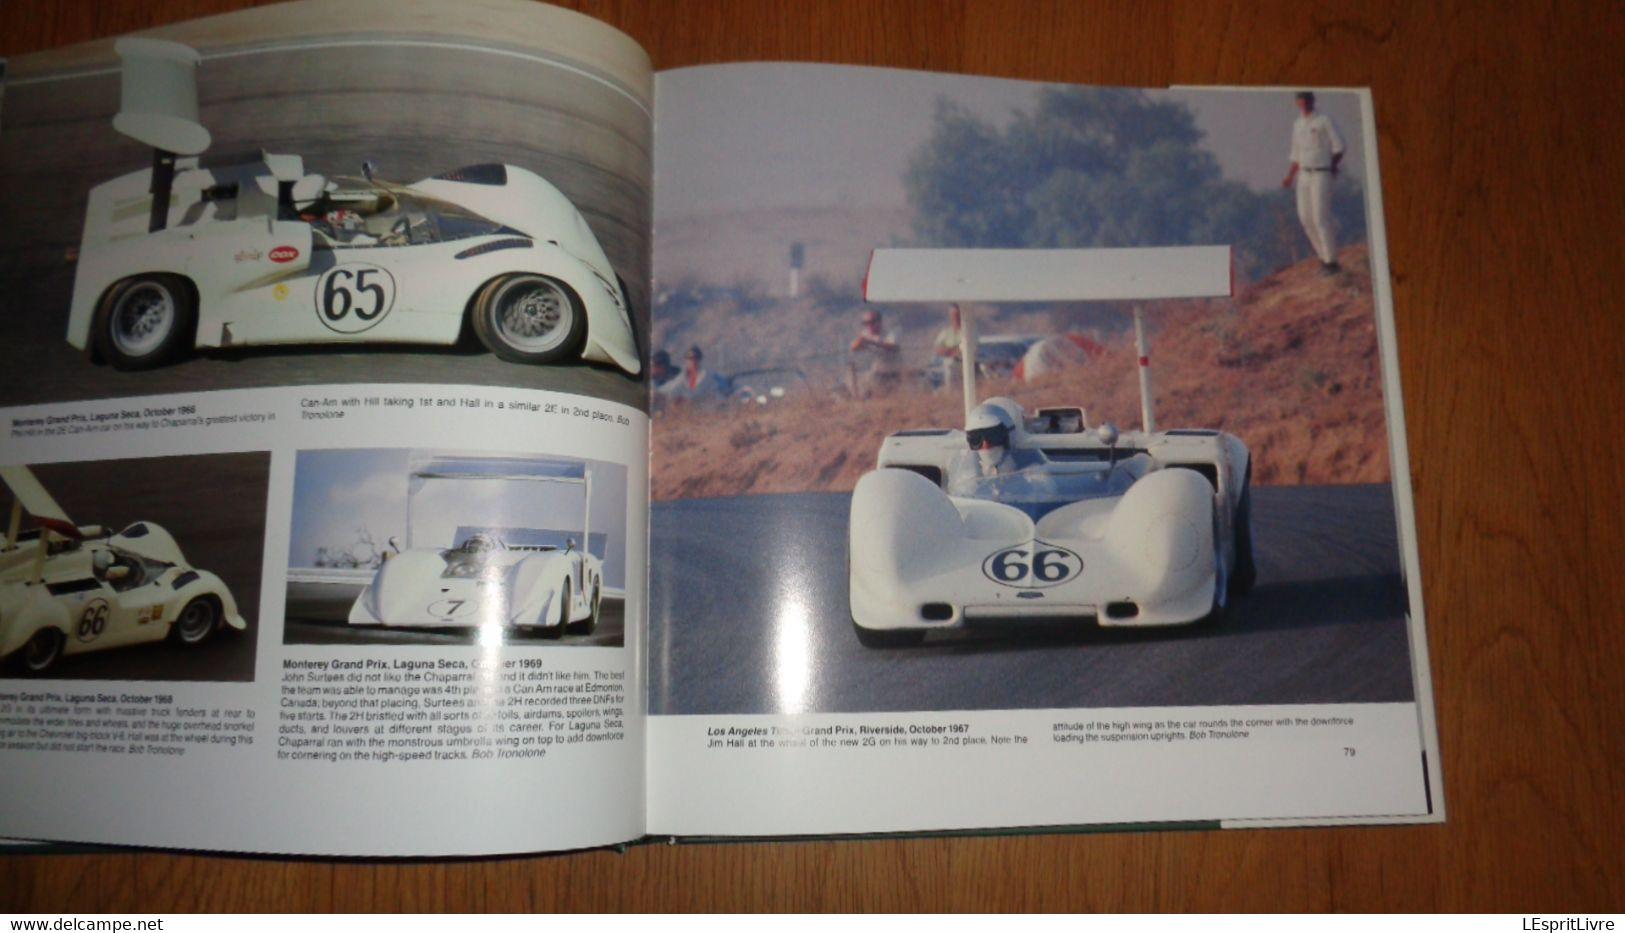 CHAPARRAL Complète History of Jim Hall's Chaparral Race Cars 1961 1970 Racing Cars Course Can Am GP Auto Automobile Car